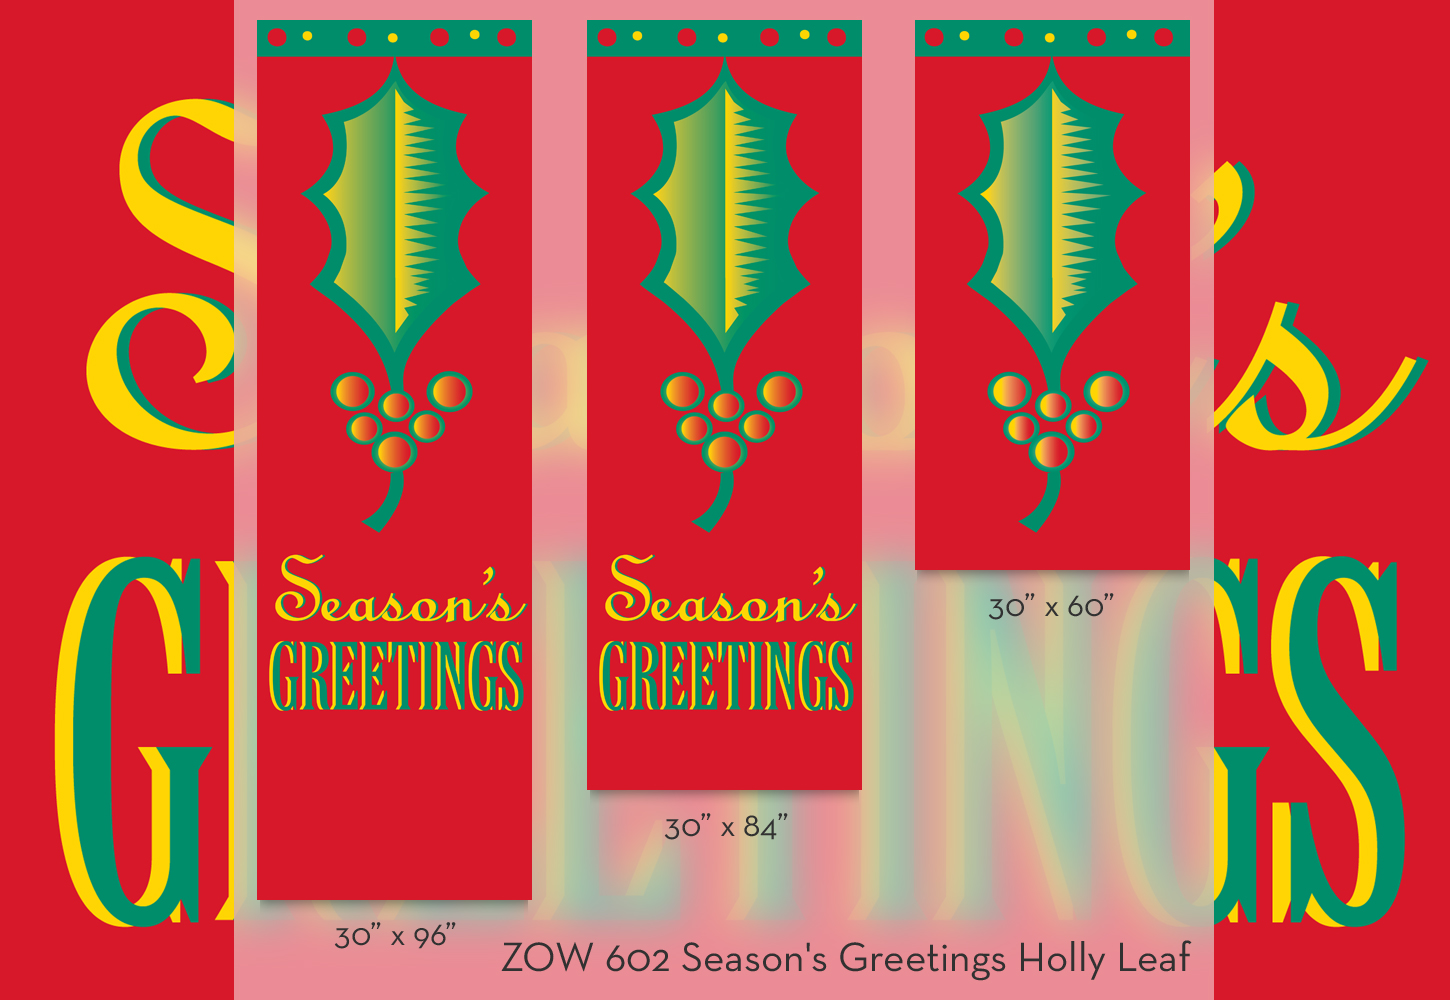 ZOW 602 Season's Greetings Holly Leaf